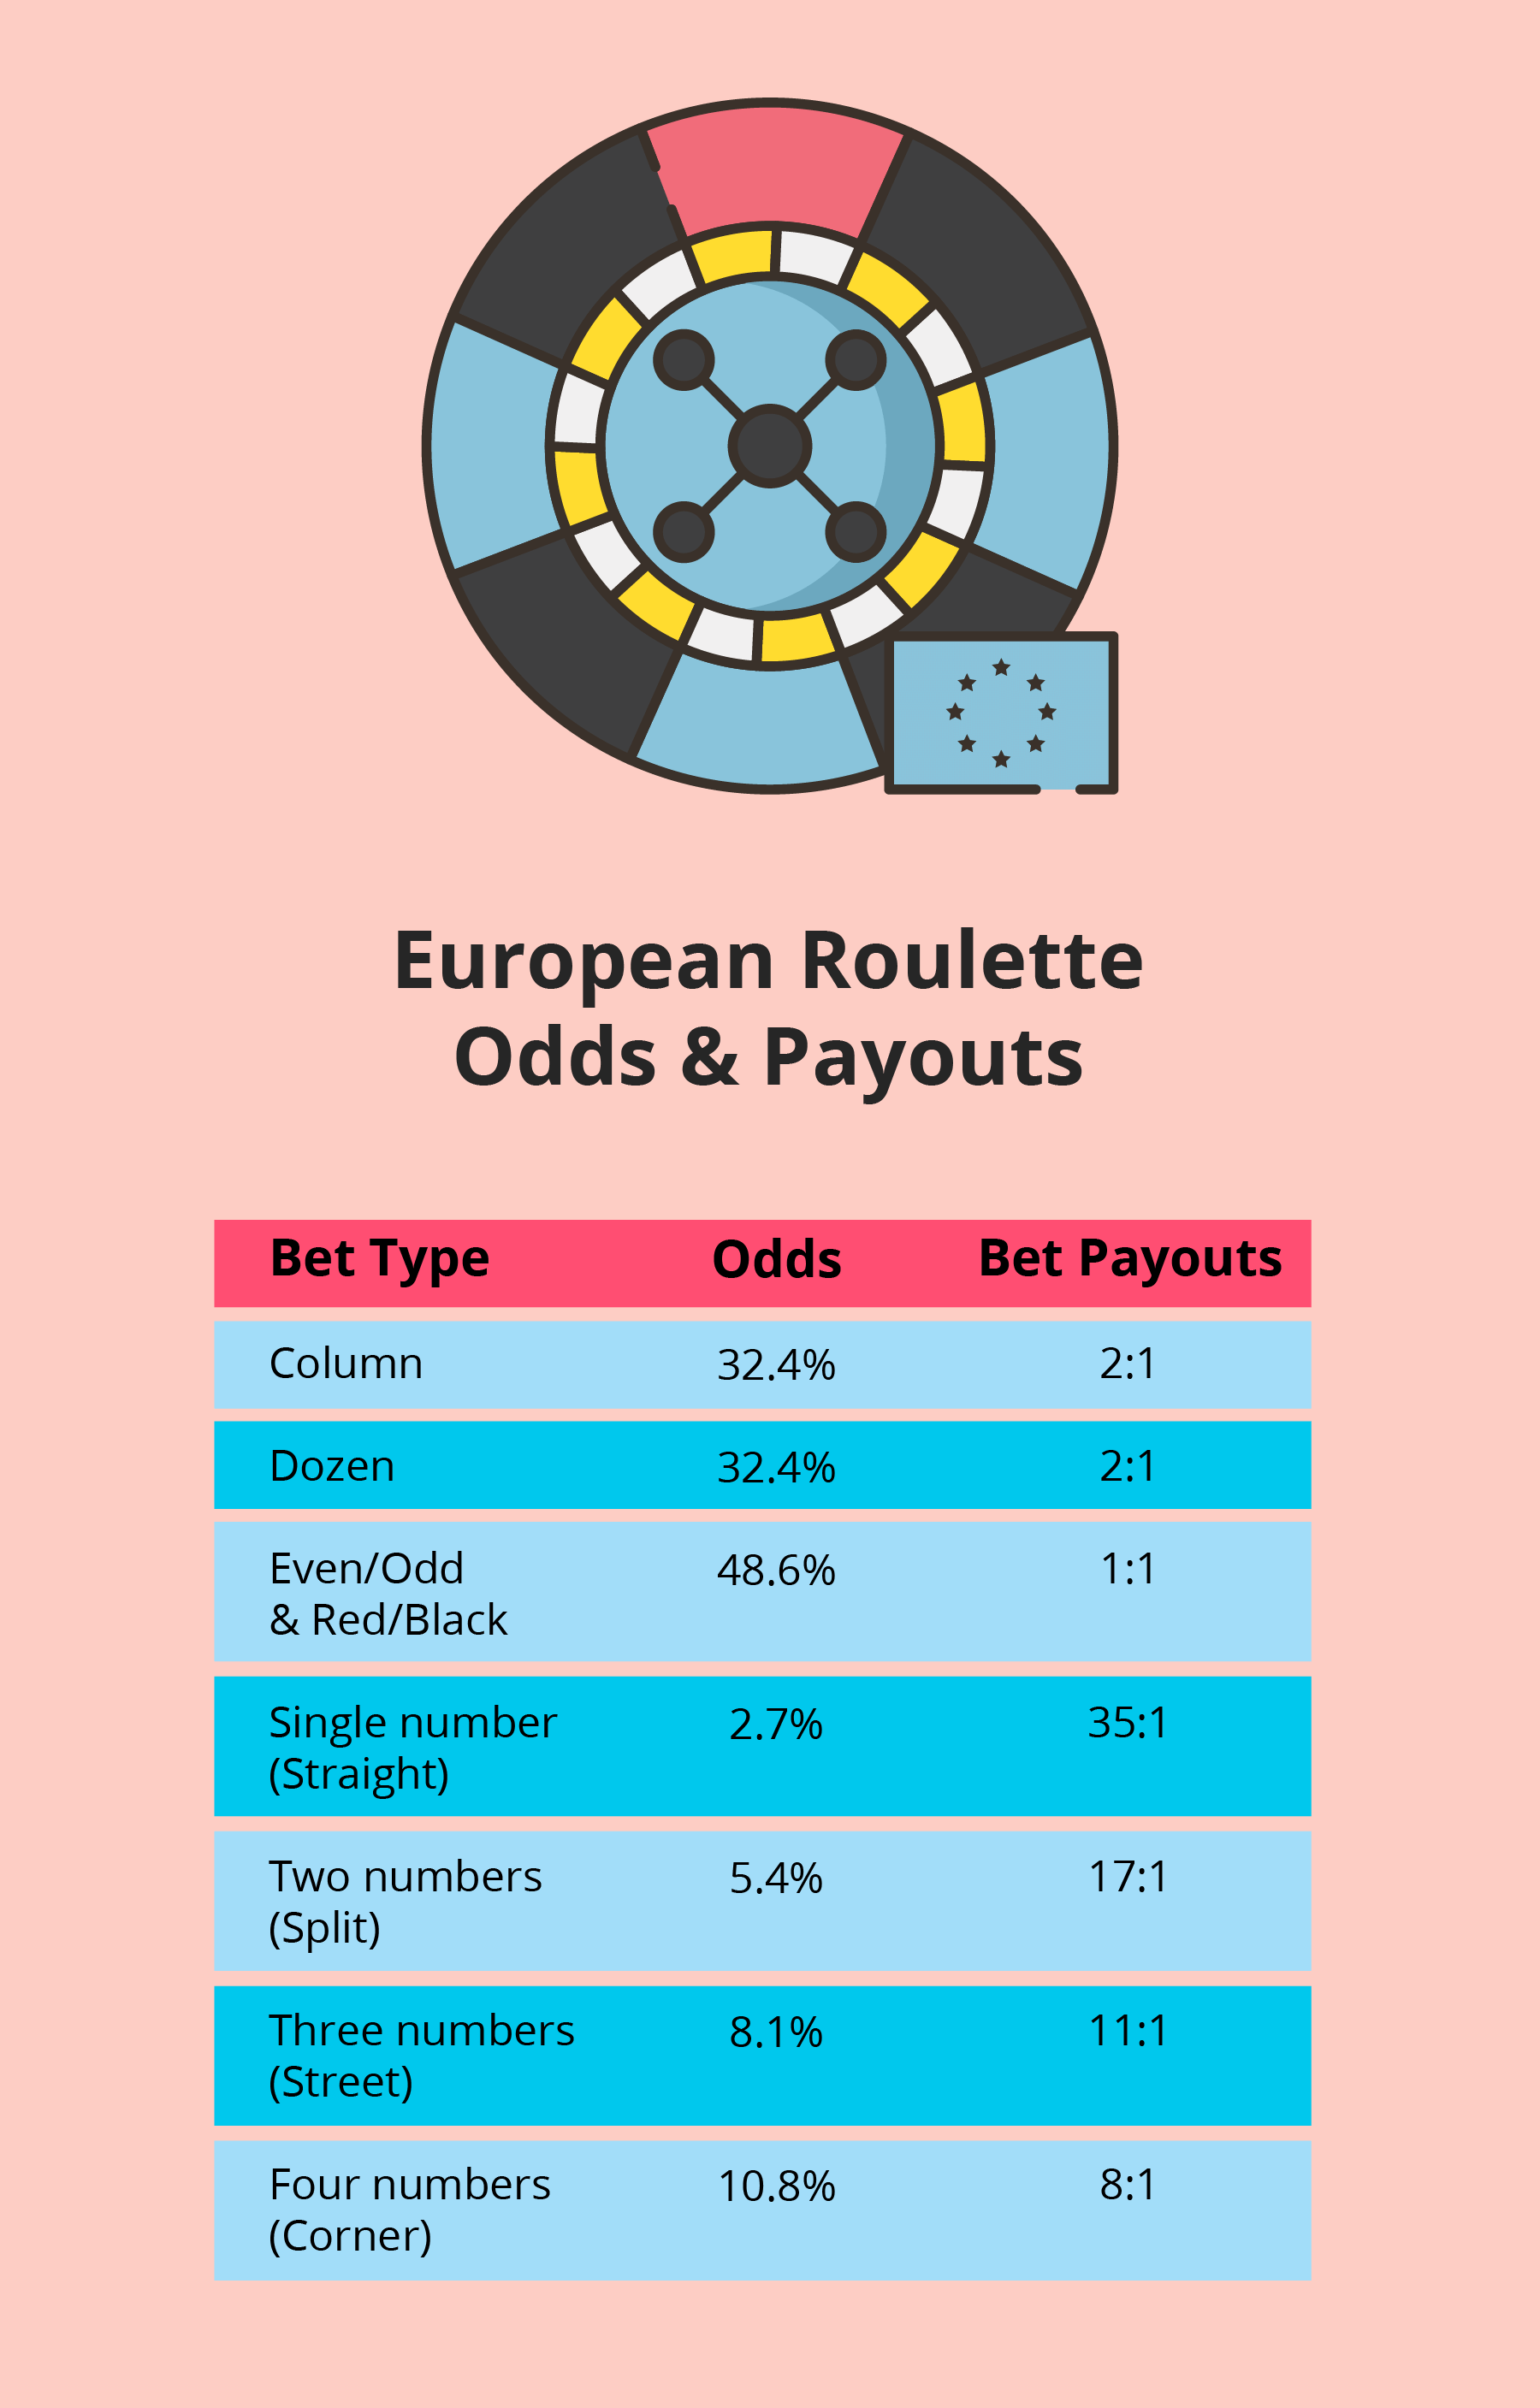 European Roulette EmiratesCasino  - Play Roulette Online UAE  - Emirates Casino Roulette Guide Online Roulette Casinos - UAE Casinos